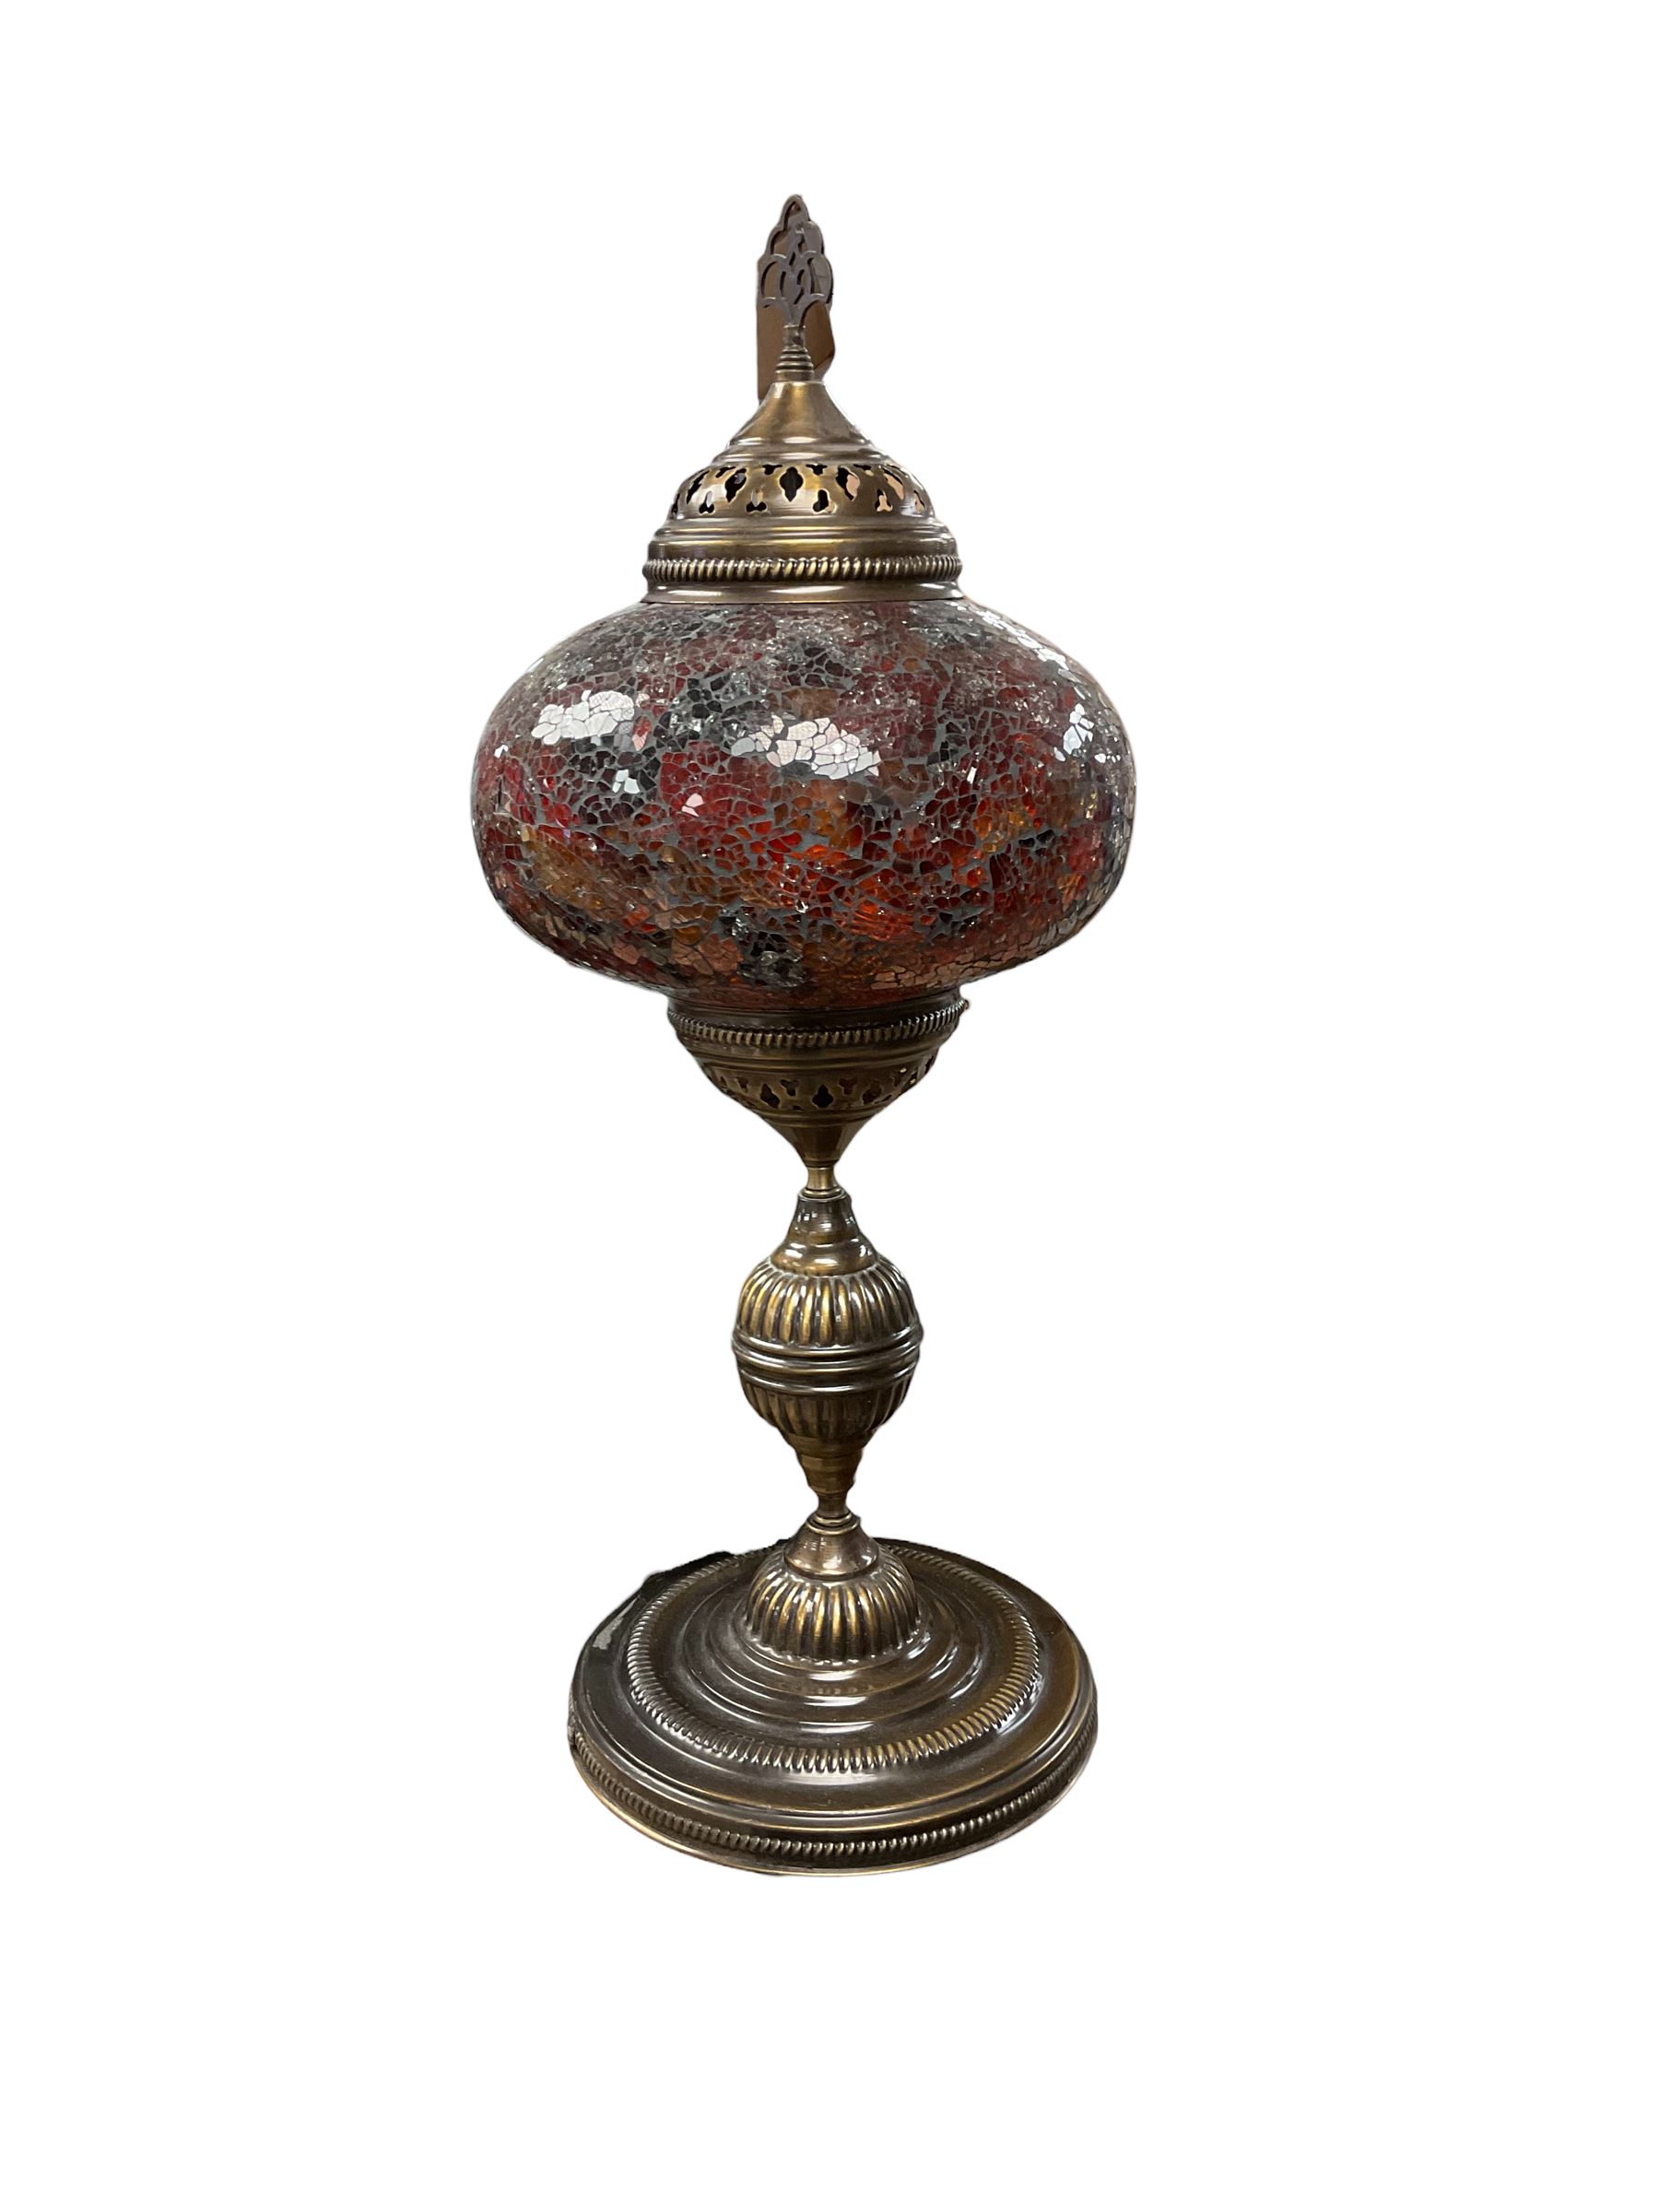 Mosaic crackle glaze globe lamp